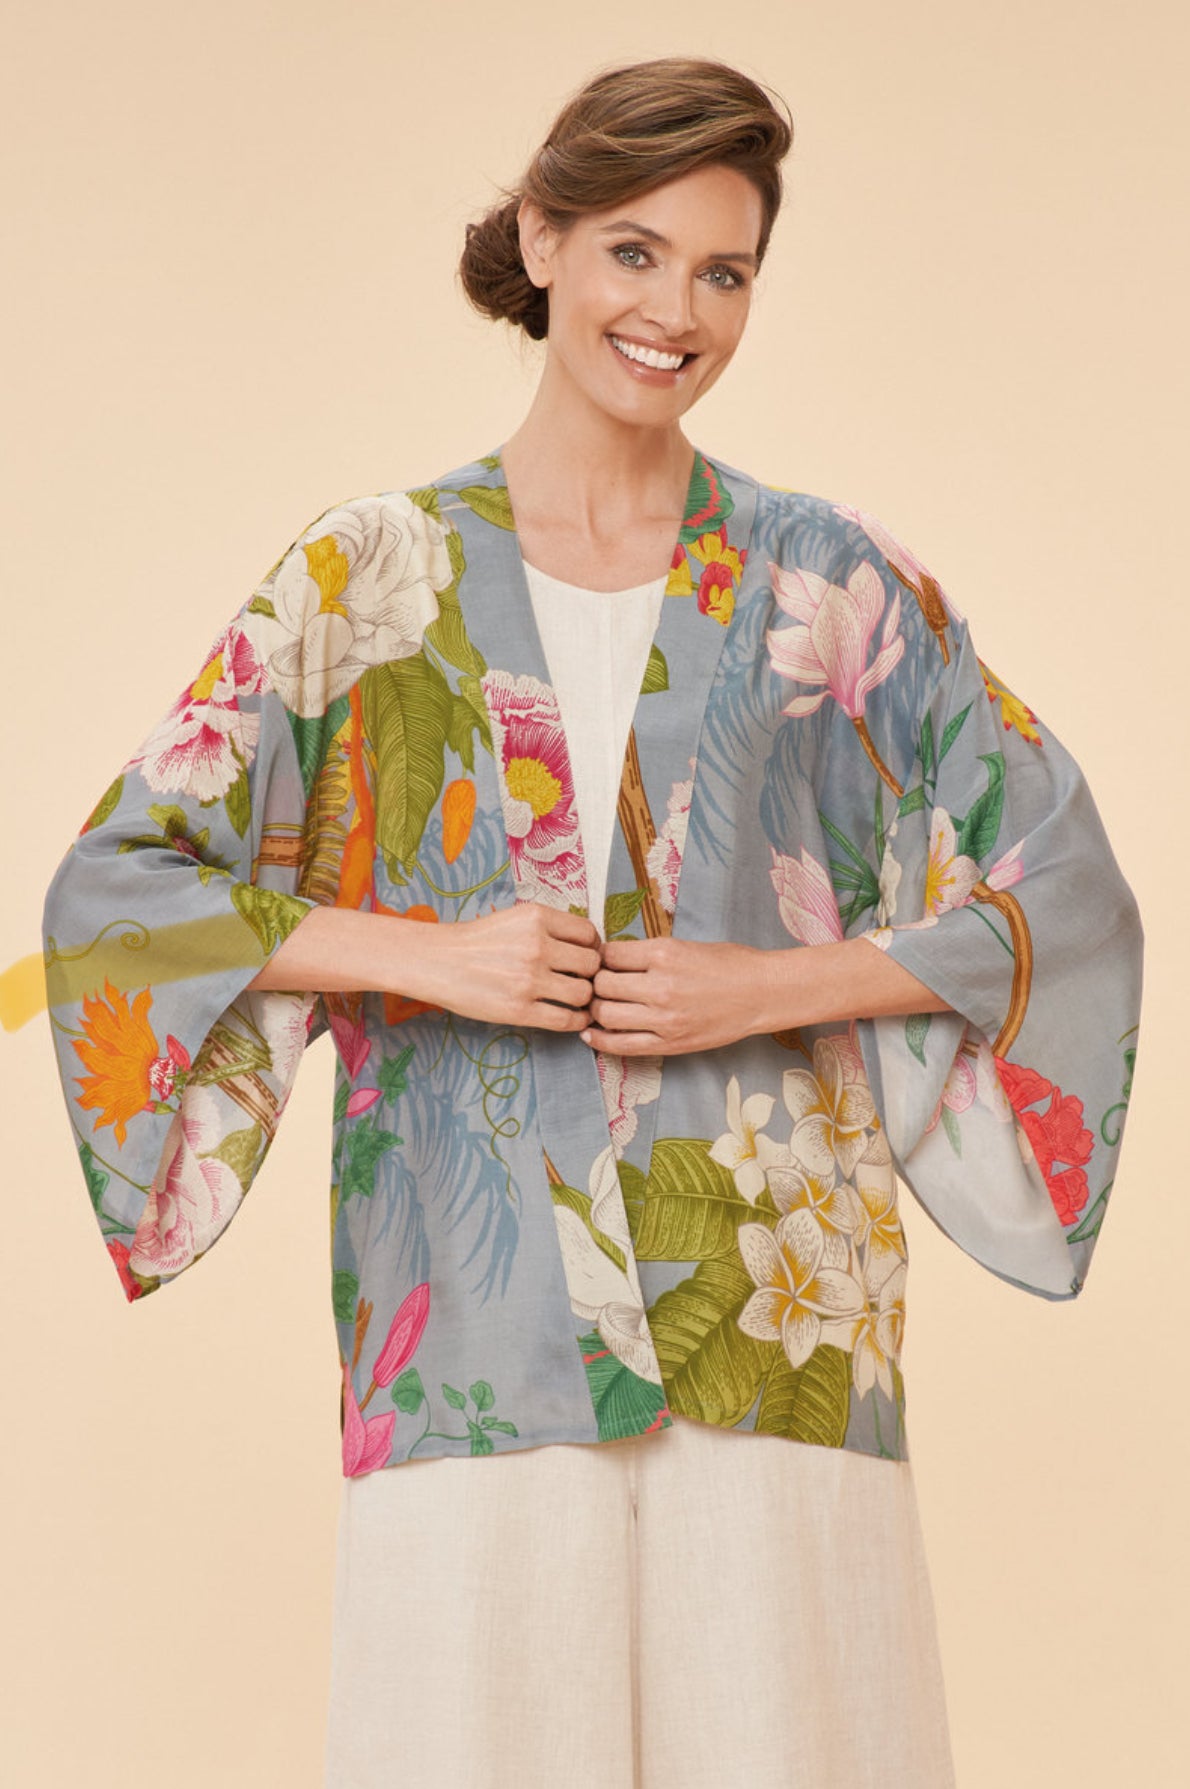 Powder Tropical Flora & Fauna Kimono Jacket in Lavender